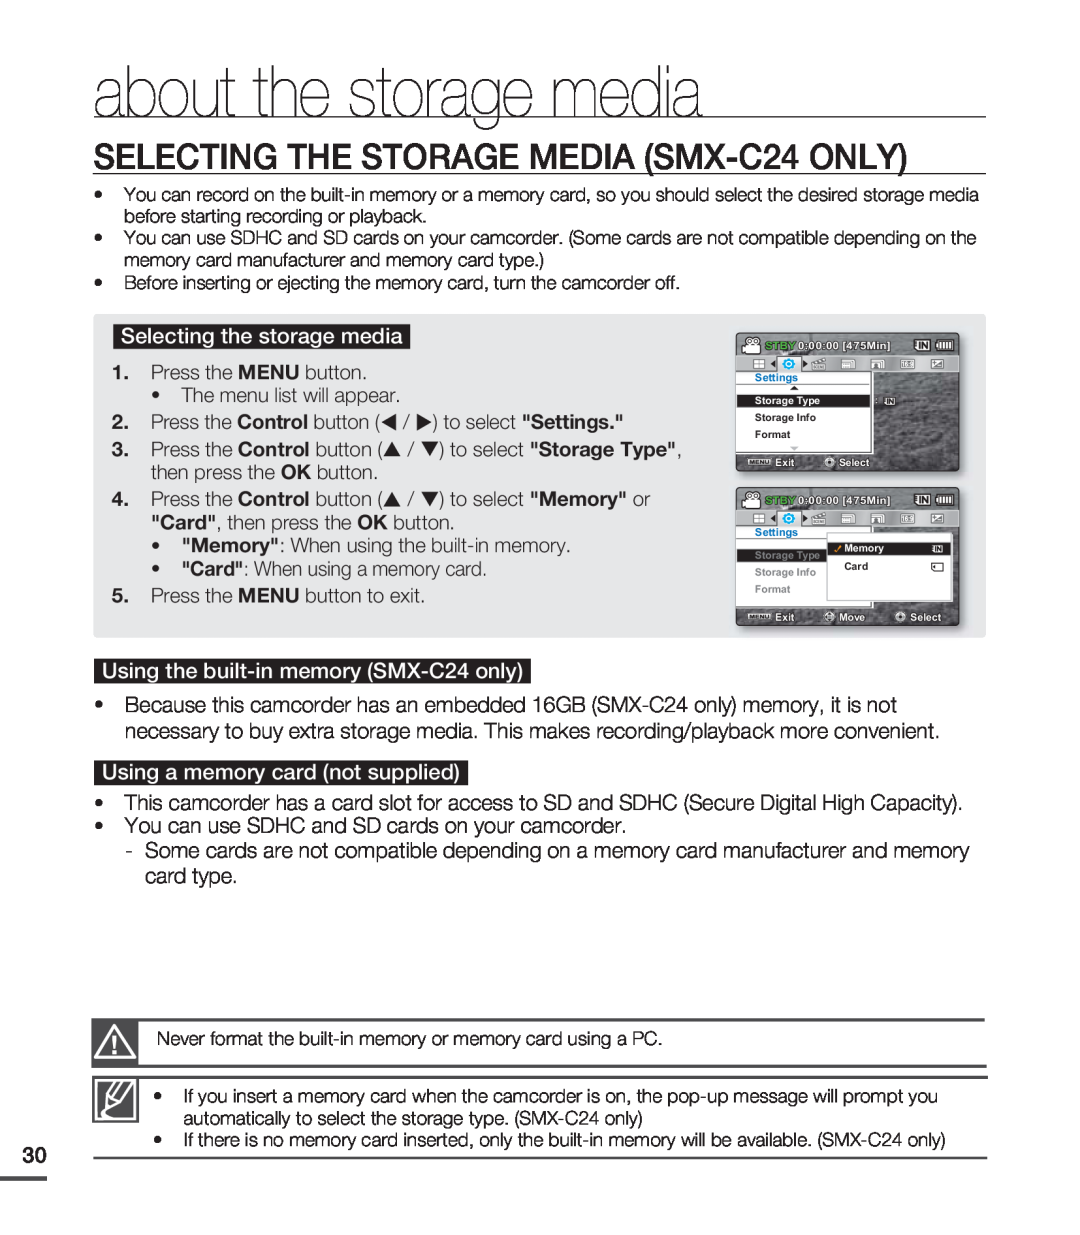 Samsung SMX-C200LP/EDC about the storage media, SELECTING THE STORAGE MEDIA SMX-C24 ONLY, Selecting the storage media 